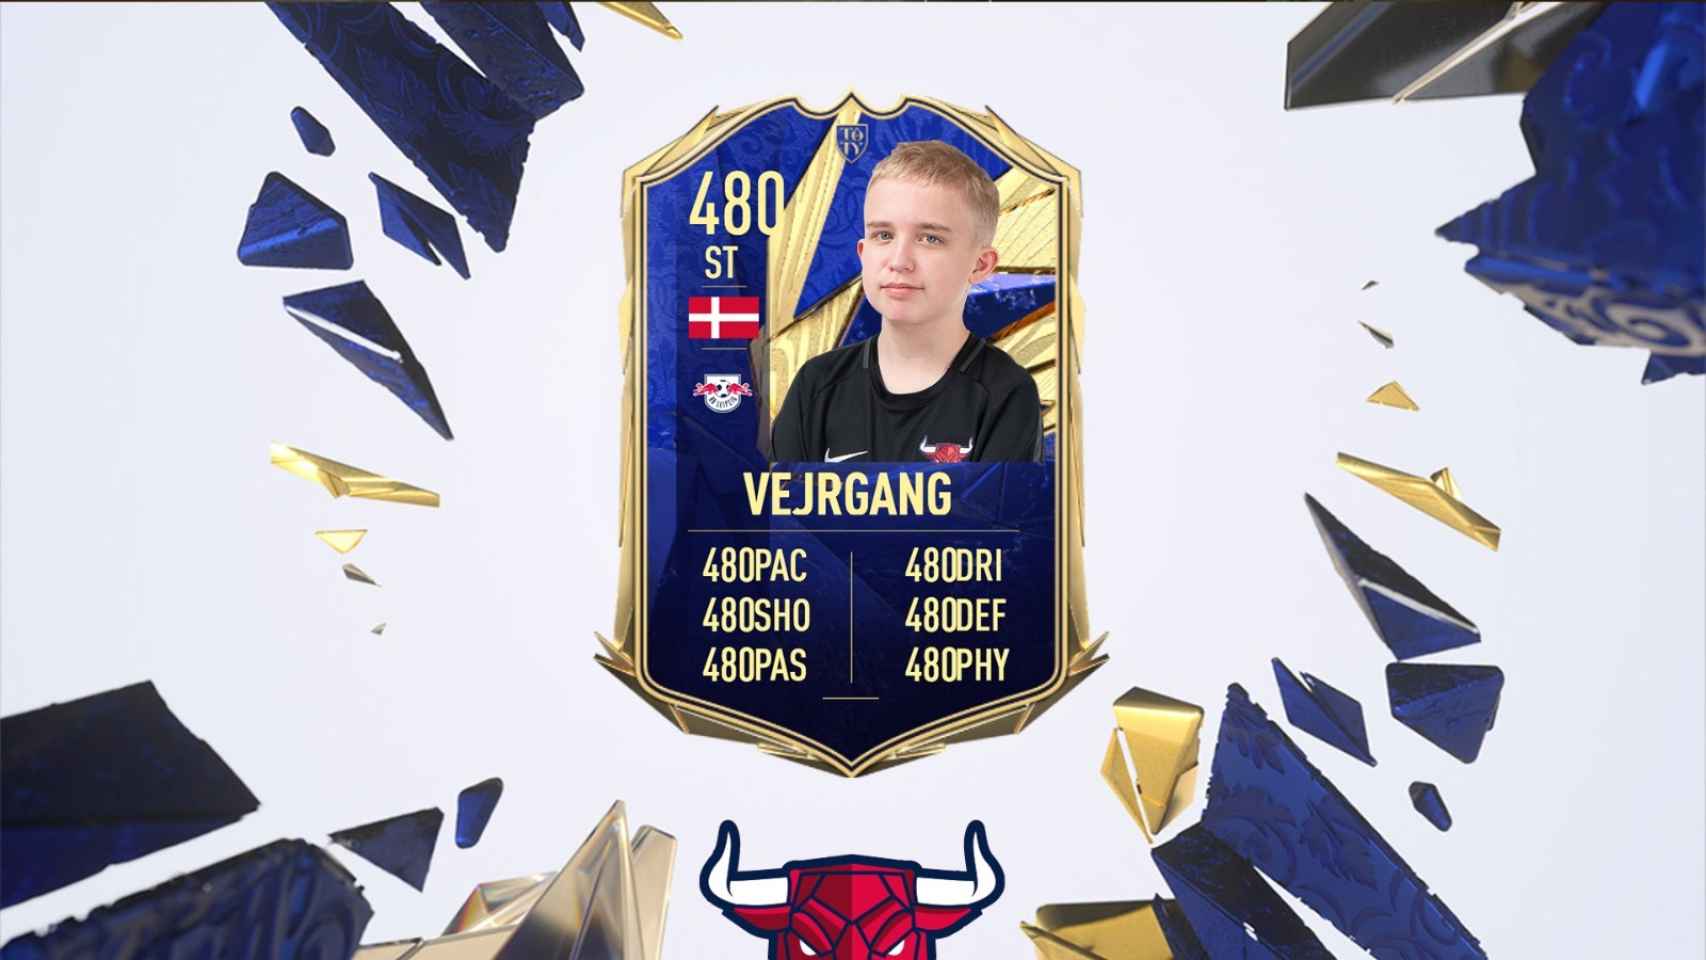 Anders Vejrgang y su récord de 480 victorias. Foto: Twitter (@RBLZ_Vejrgang)